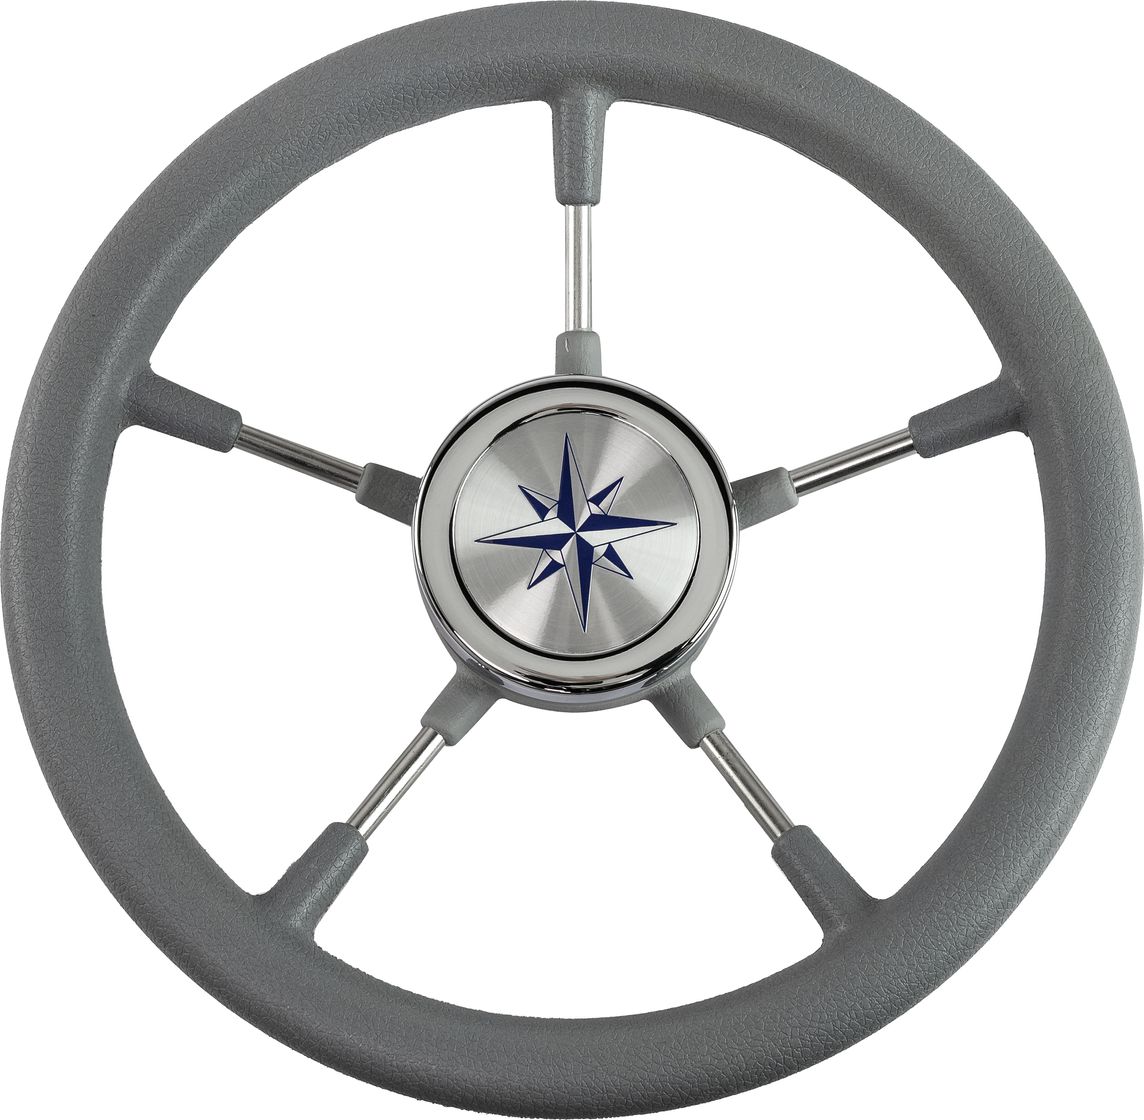 Рулевое колесо RIVA RSL обод серый, спицы серебряные д. 320 мм VN732022-03 рулевое колесо leader wood деревянный обод серебряные спицы д 360 мм vn7360 33